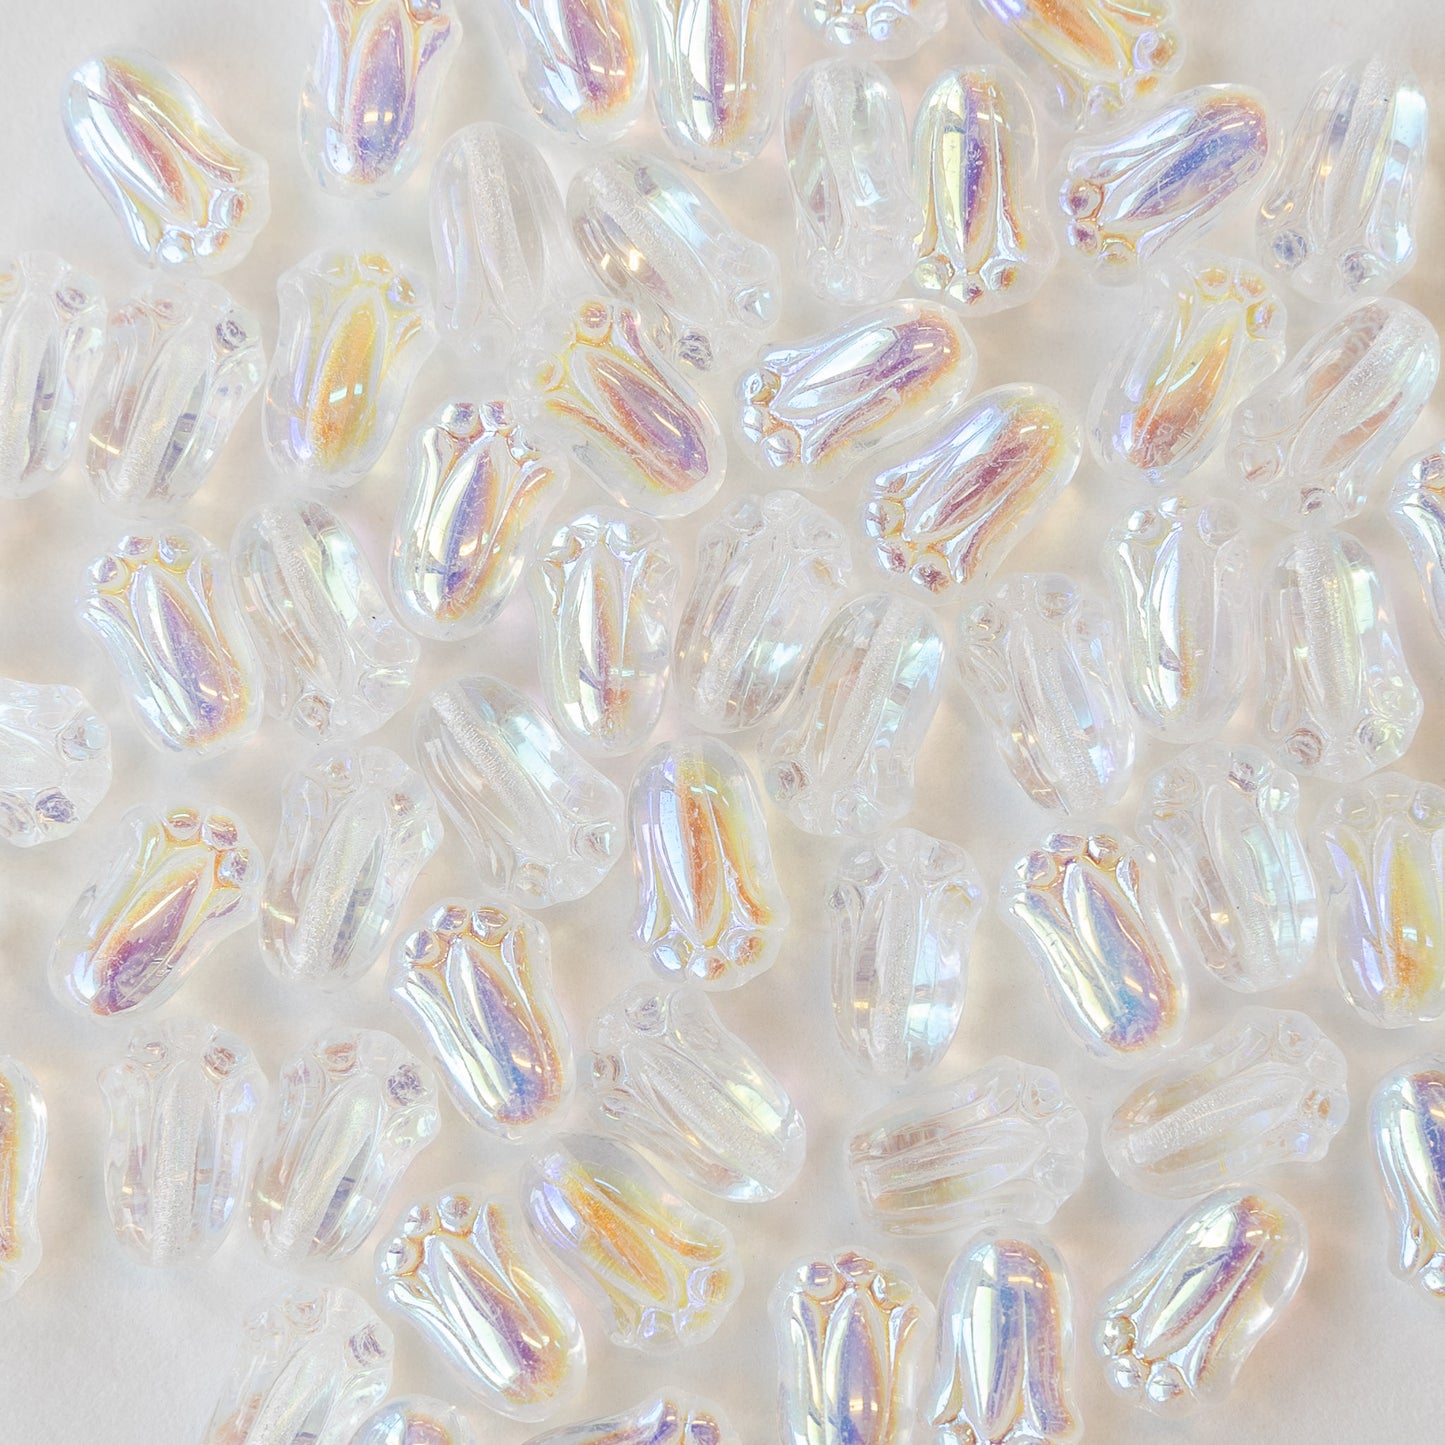 10mm Glass Tulip Beads - Crystal AB - 20 Beads